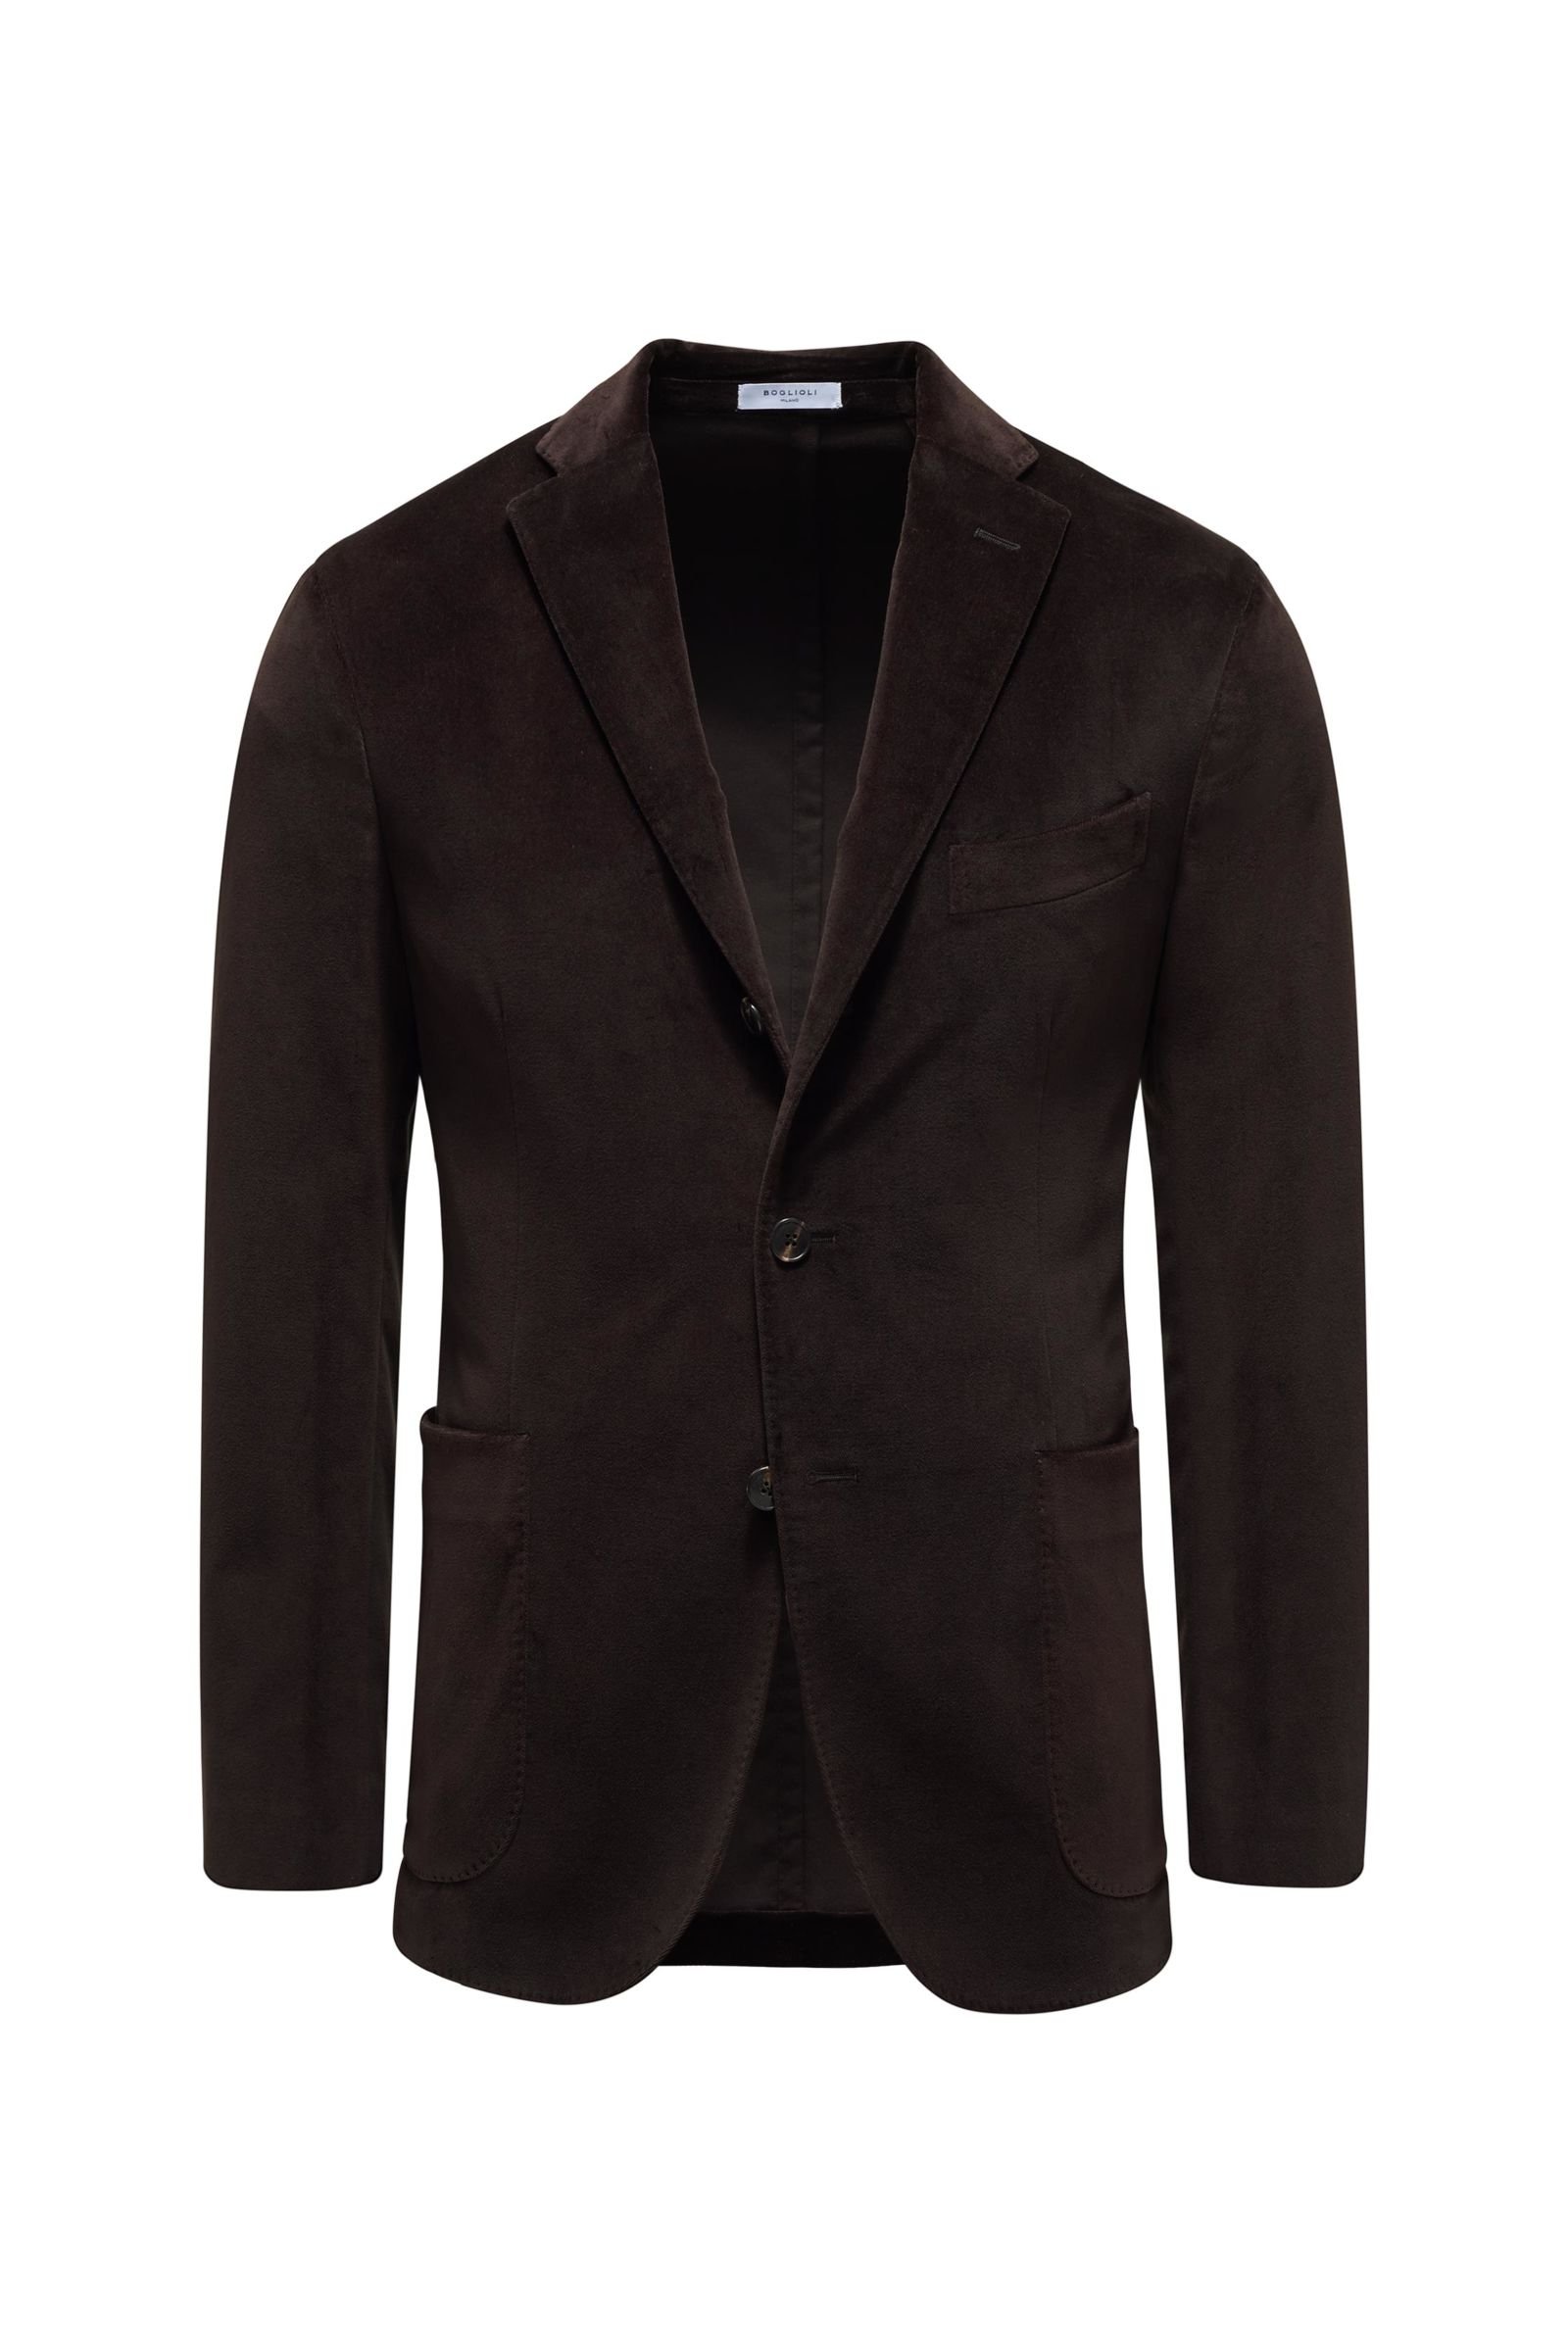 BOGLIOLI velvet jacket dark brown | BRAUN Hamburg